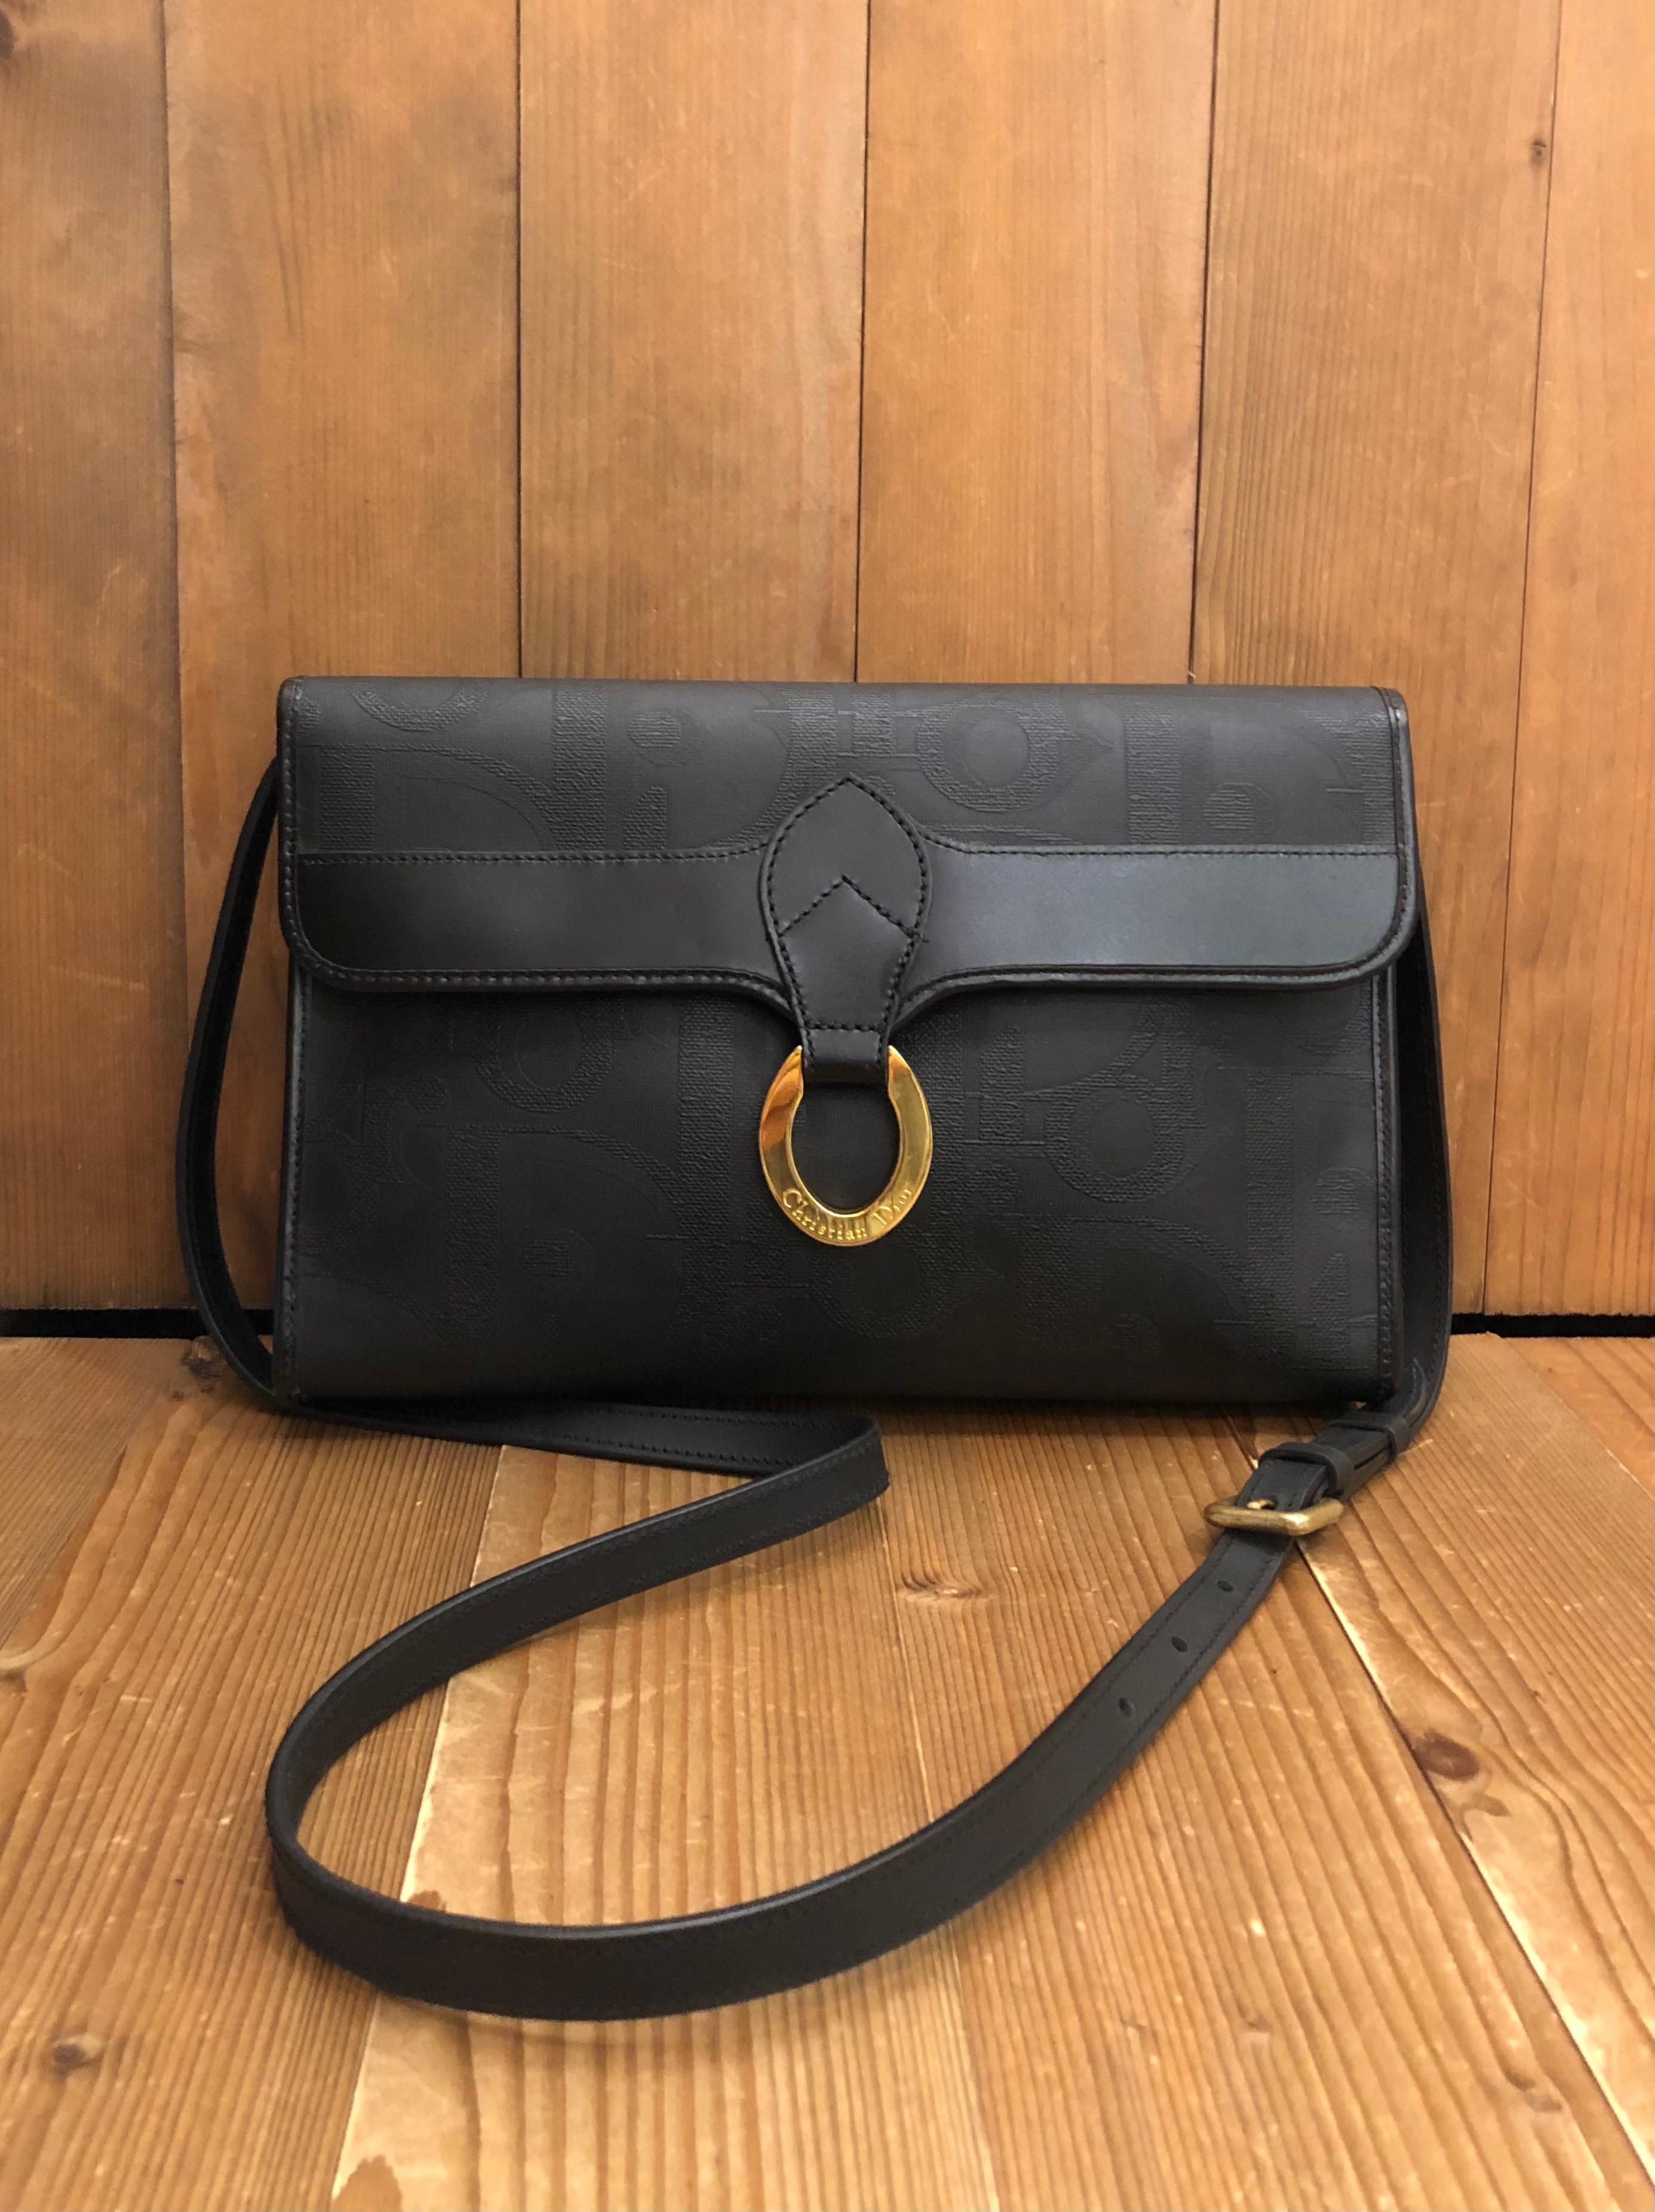 Christian Dior Clutch bag leather black Pouch. Unisex